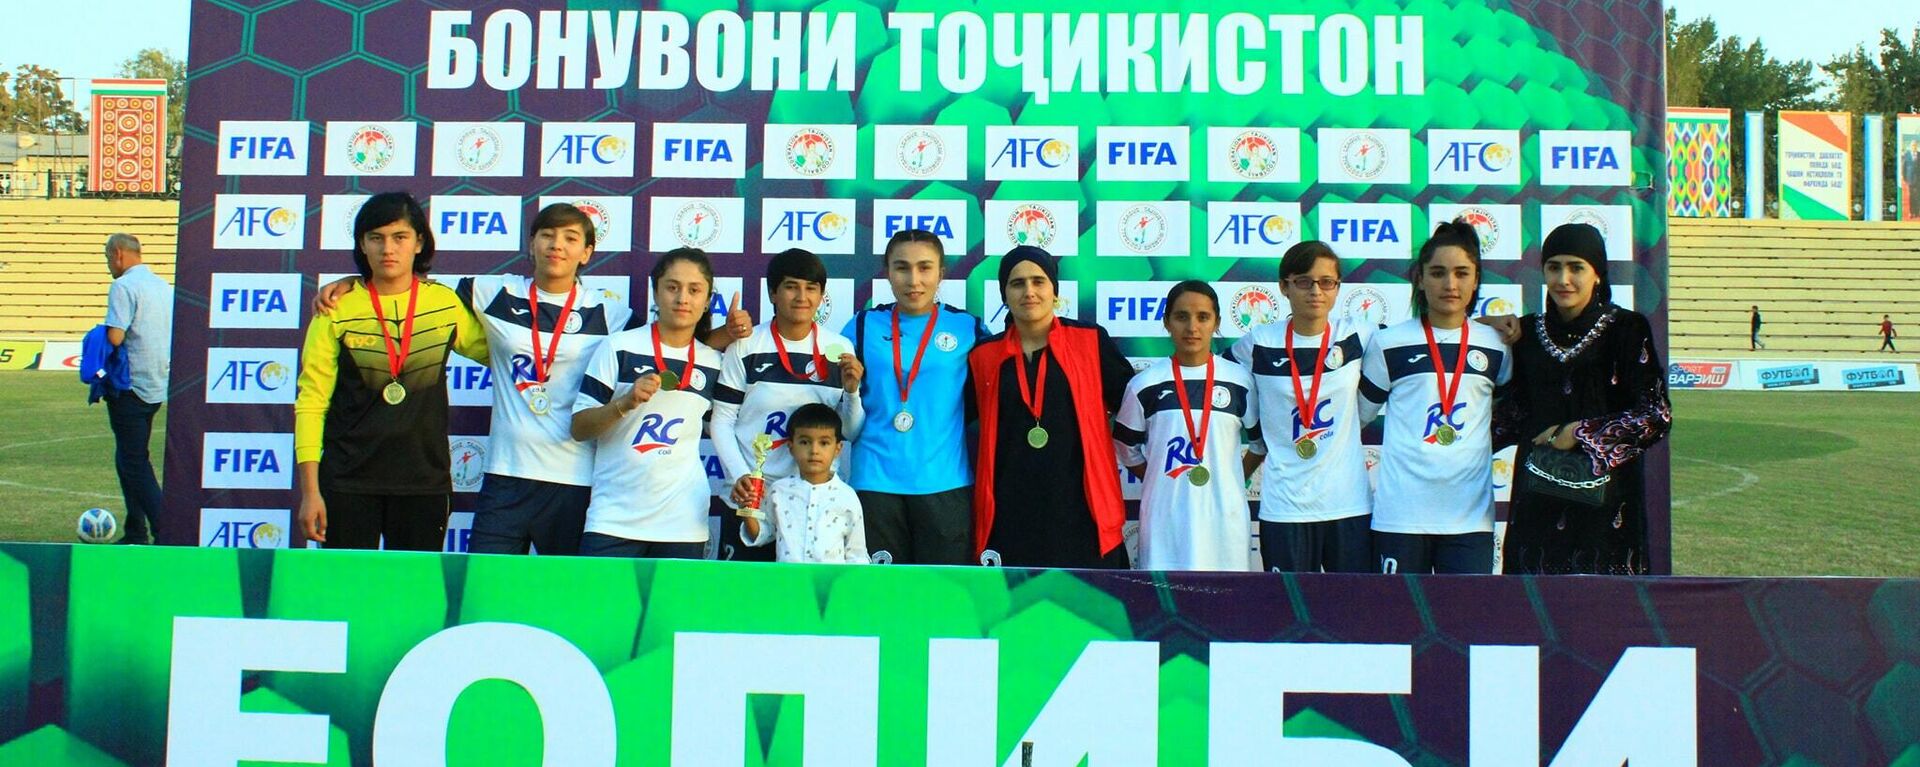 Команда Хатлон стала победителем Чемпионата Таджикистана среди женских команд - Sputnik Тоҷикистон, 1920, 18.10.2021